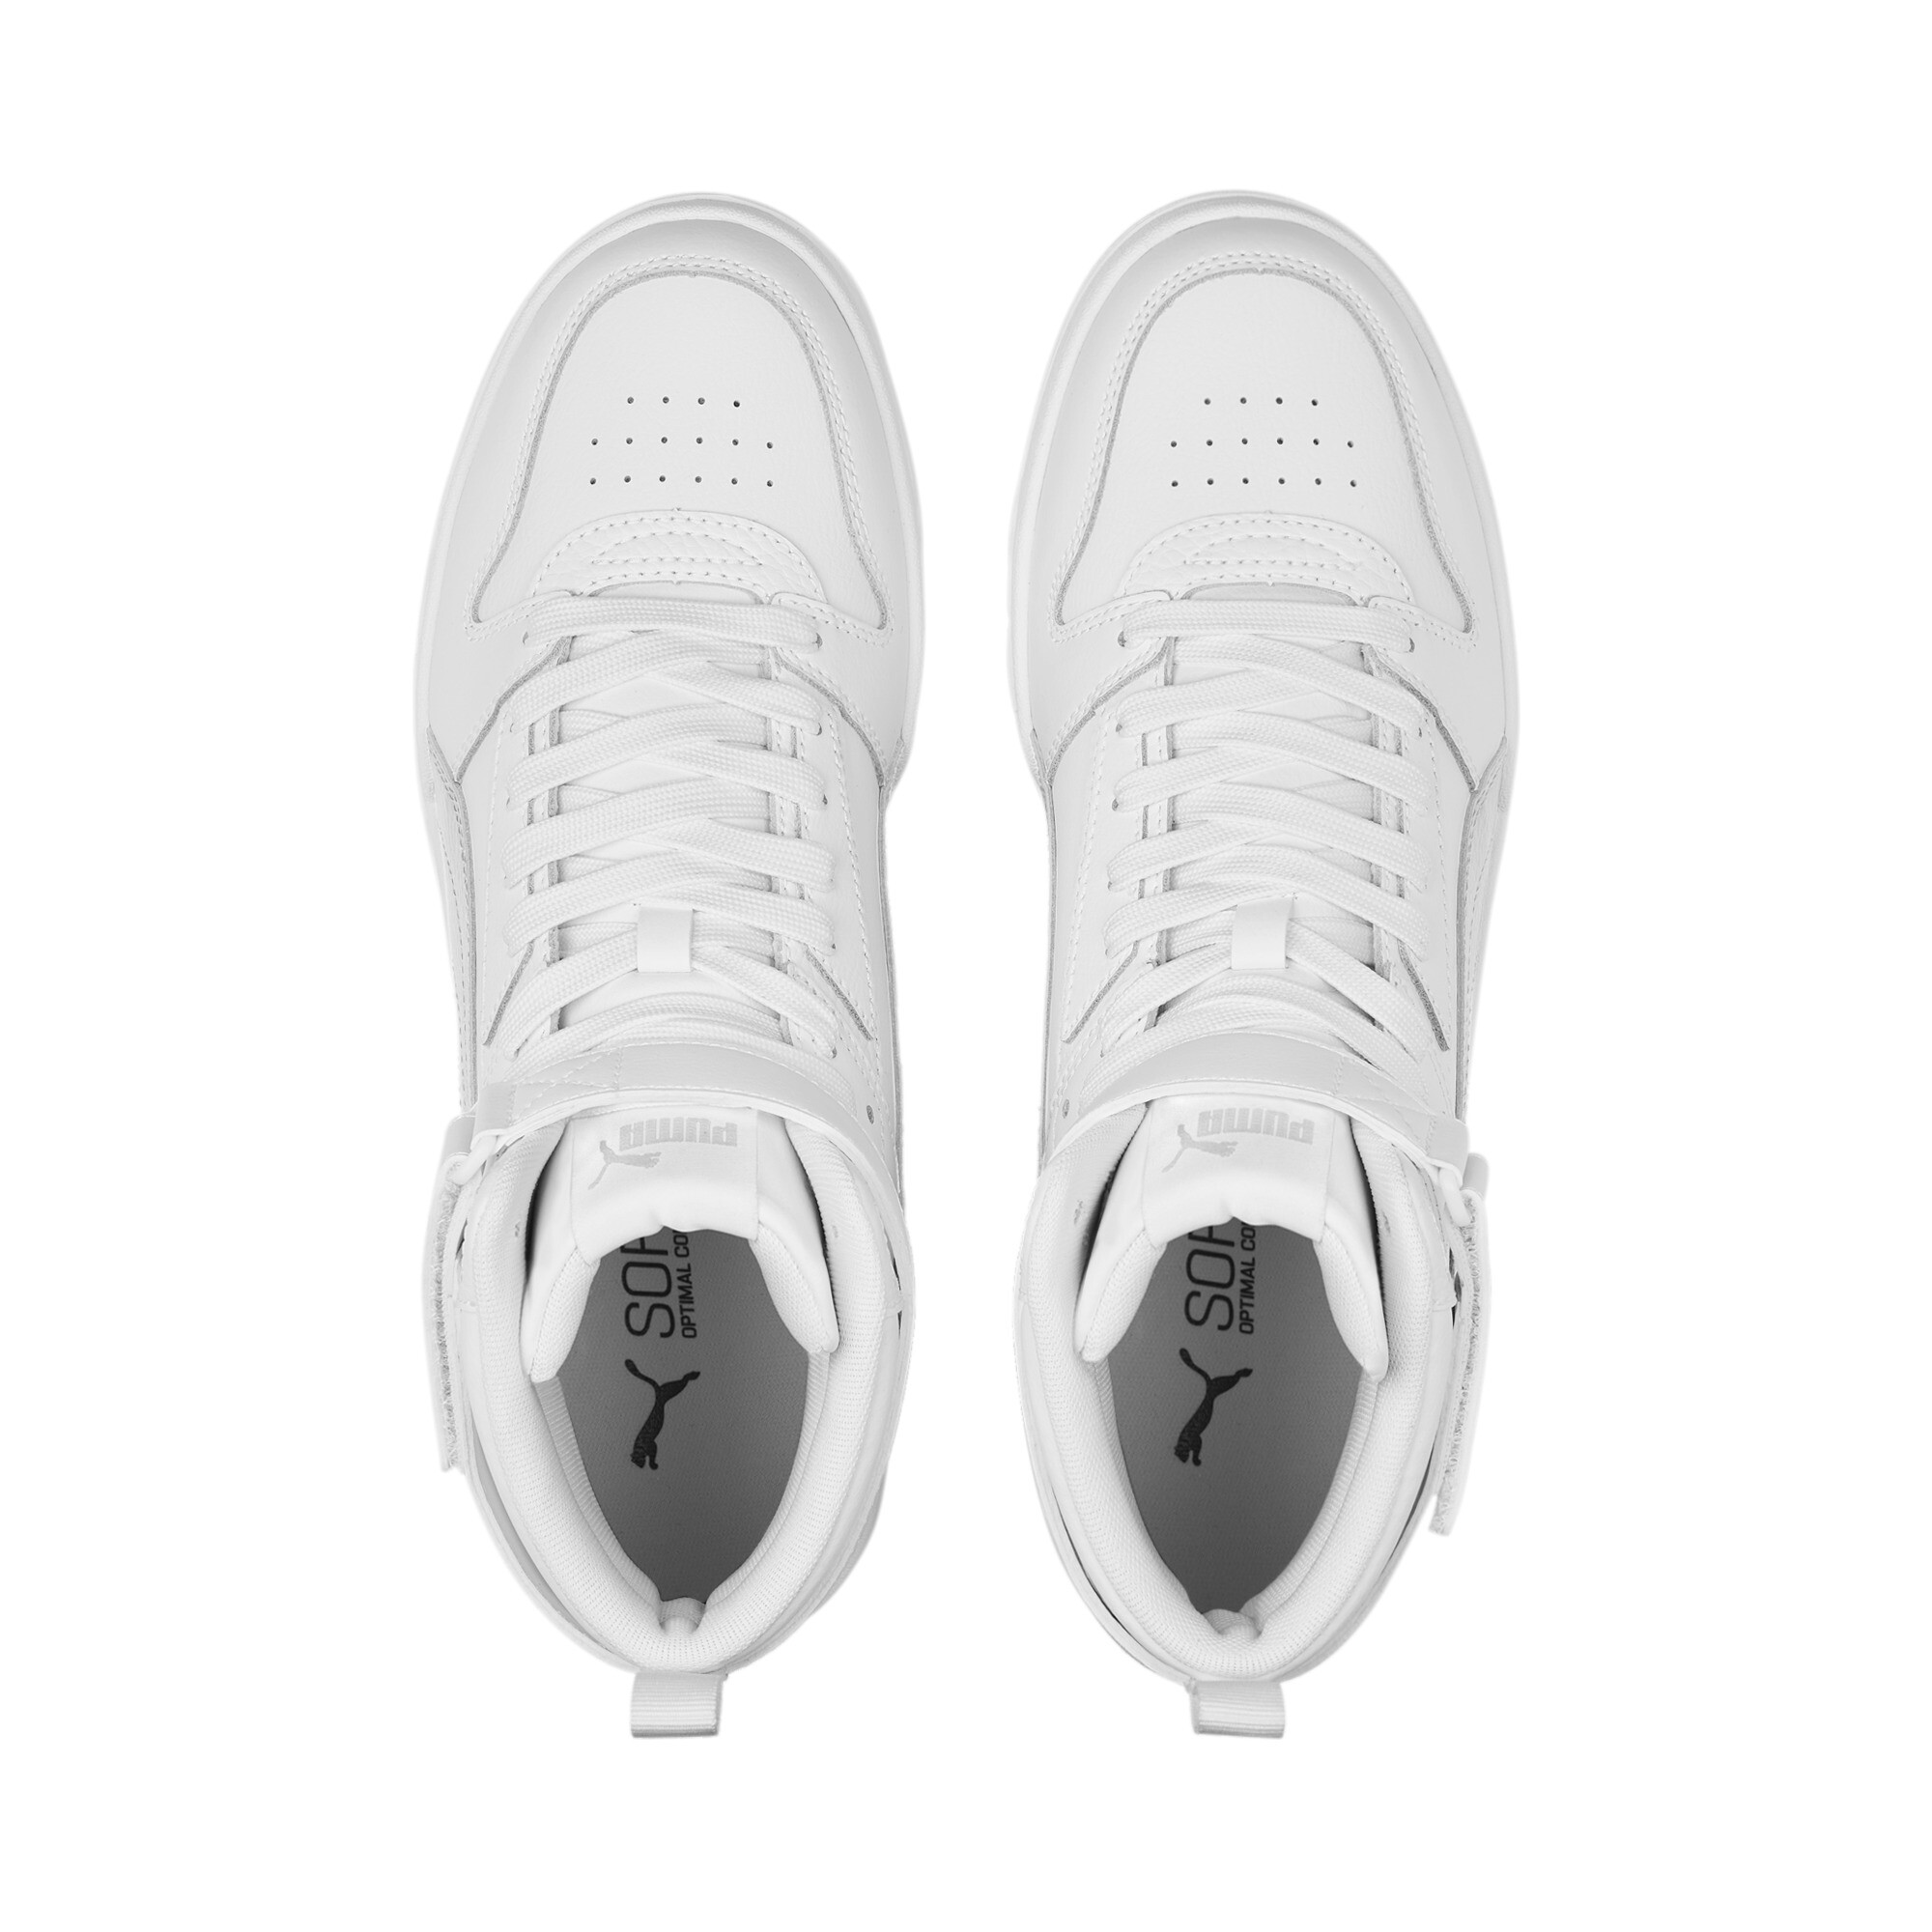 Men's PUMA RBD Game Sneakers In White/Gold, Size EU 47